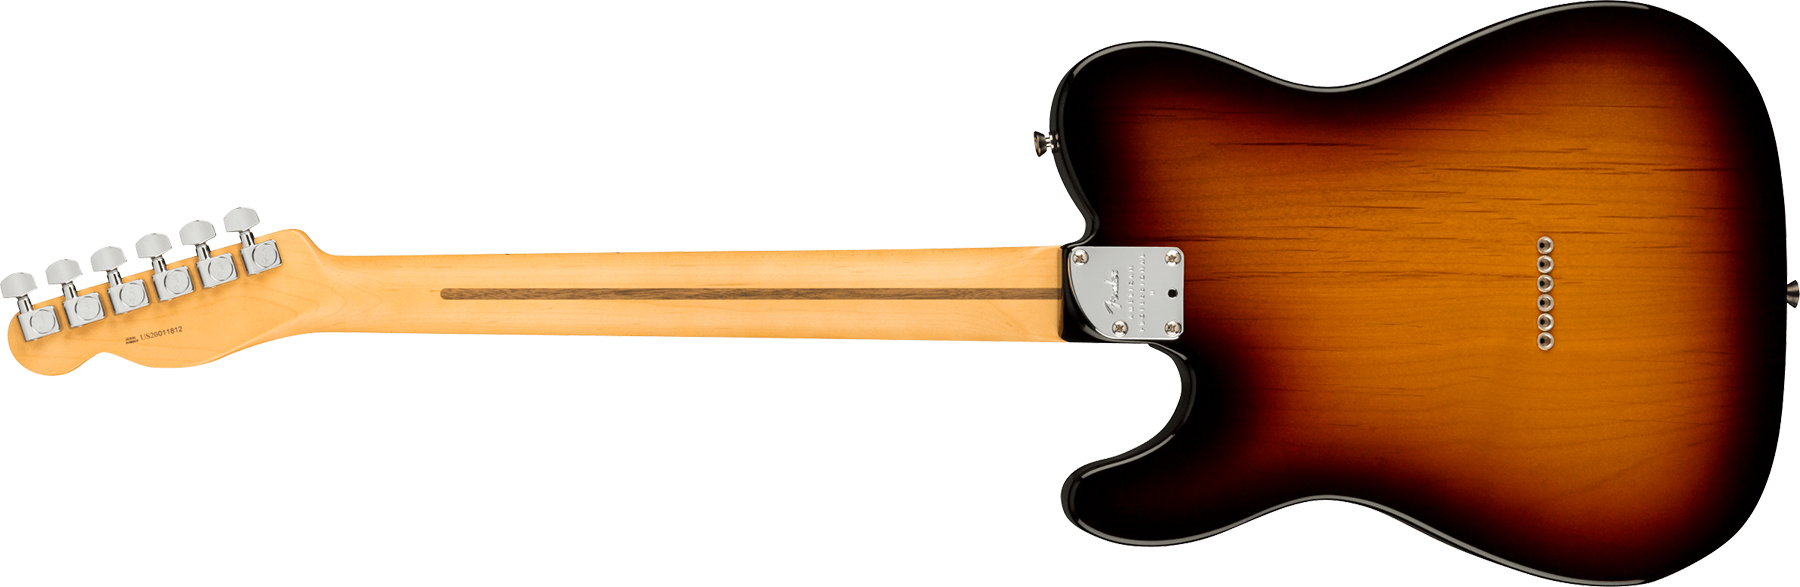 Fender Tele American Professional Ii Usa Mn - 3-color Sunburst - E-Gitarre in Teleform - Variation 1